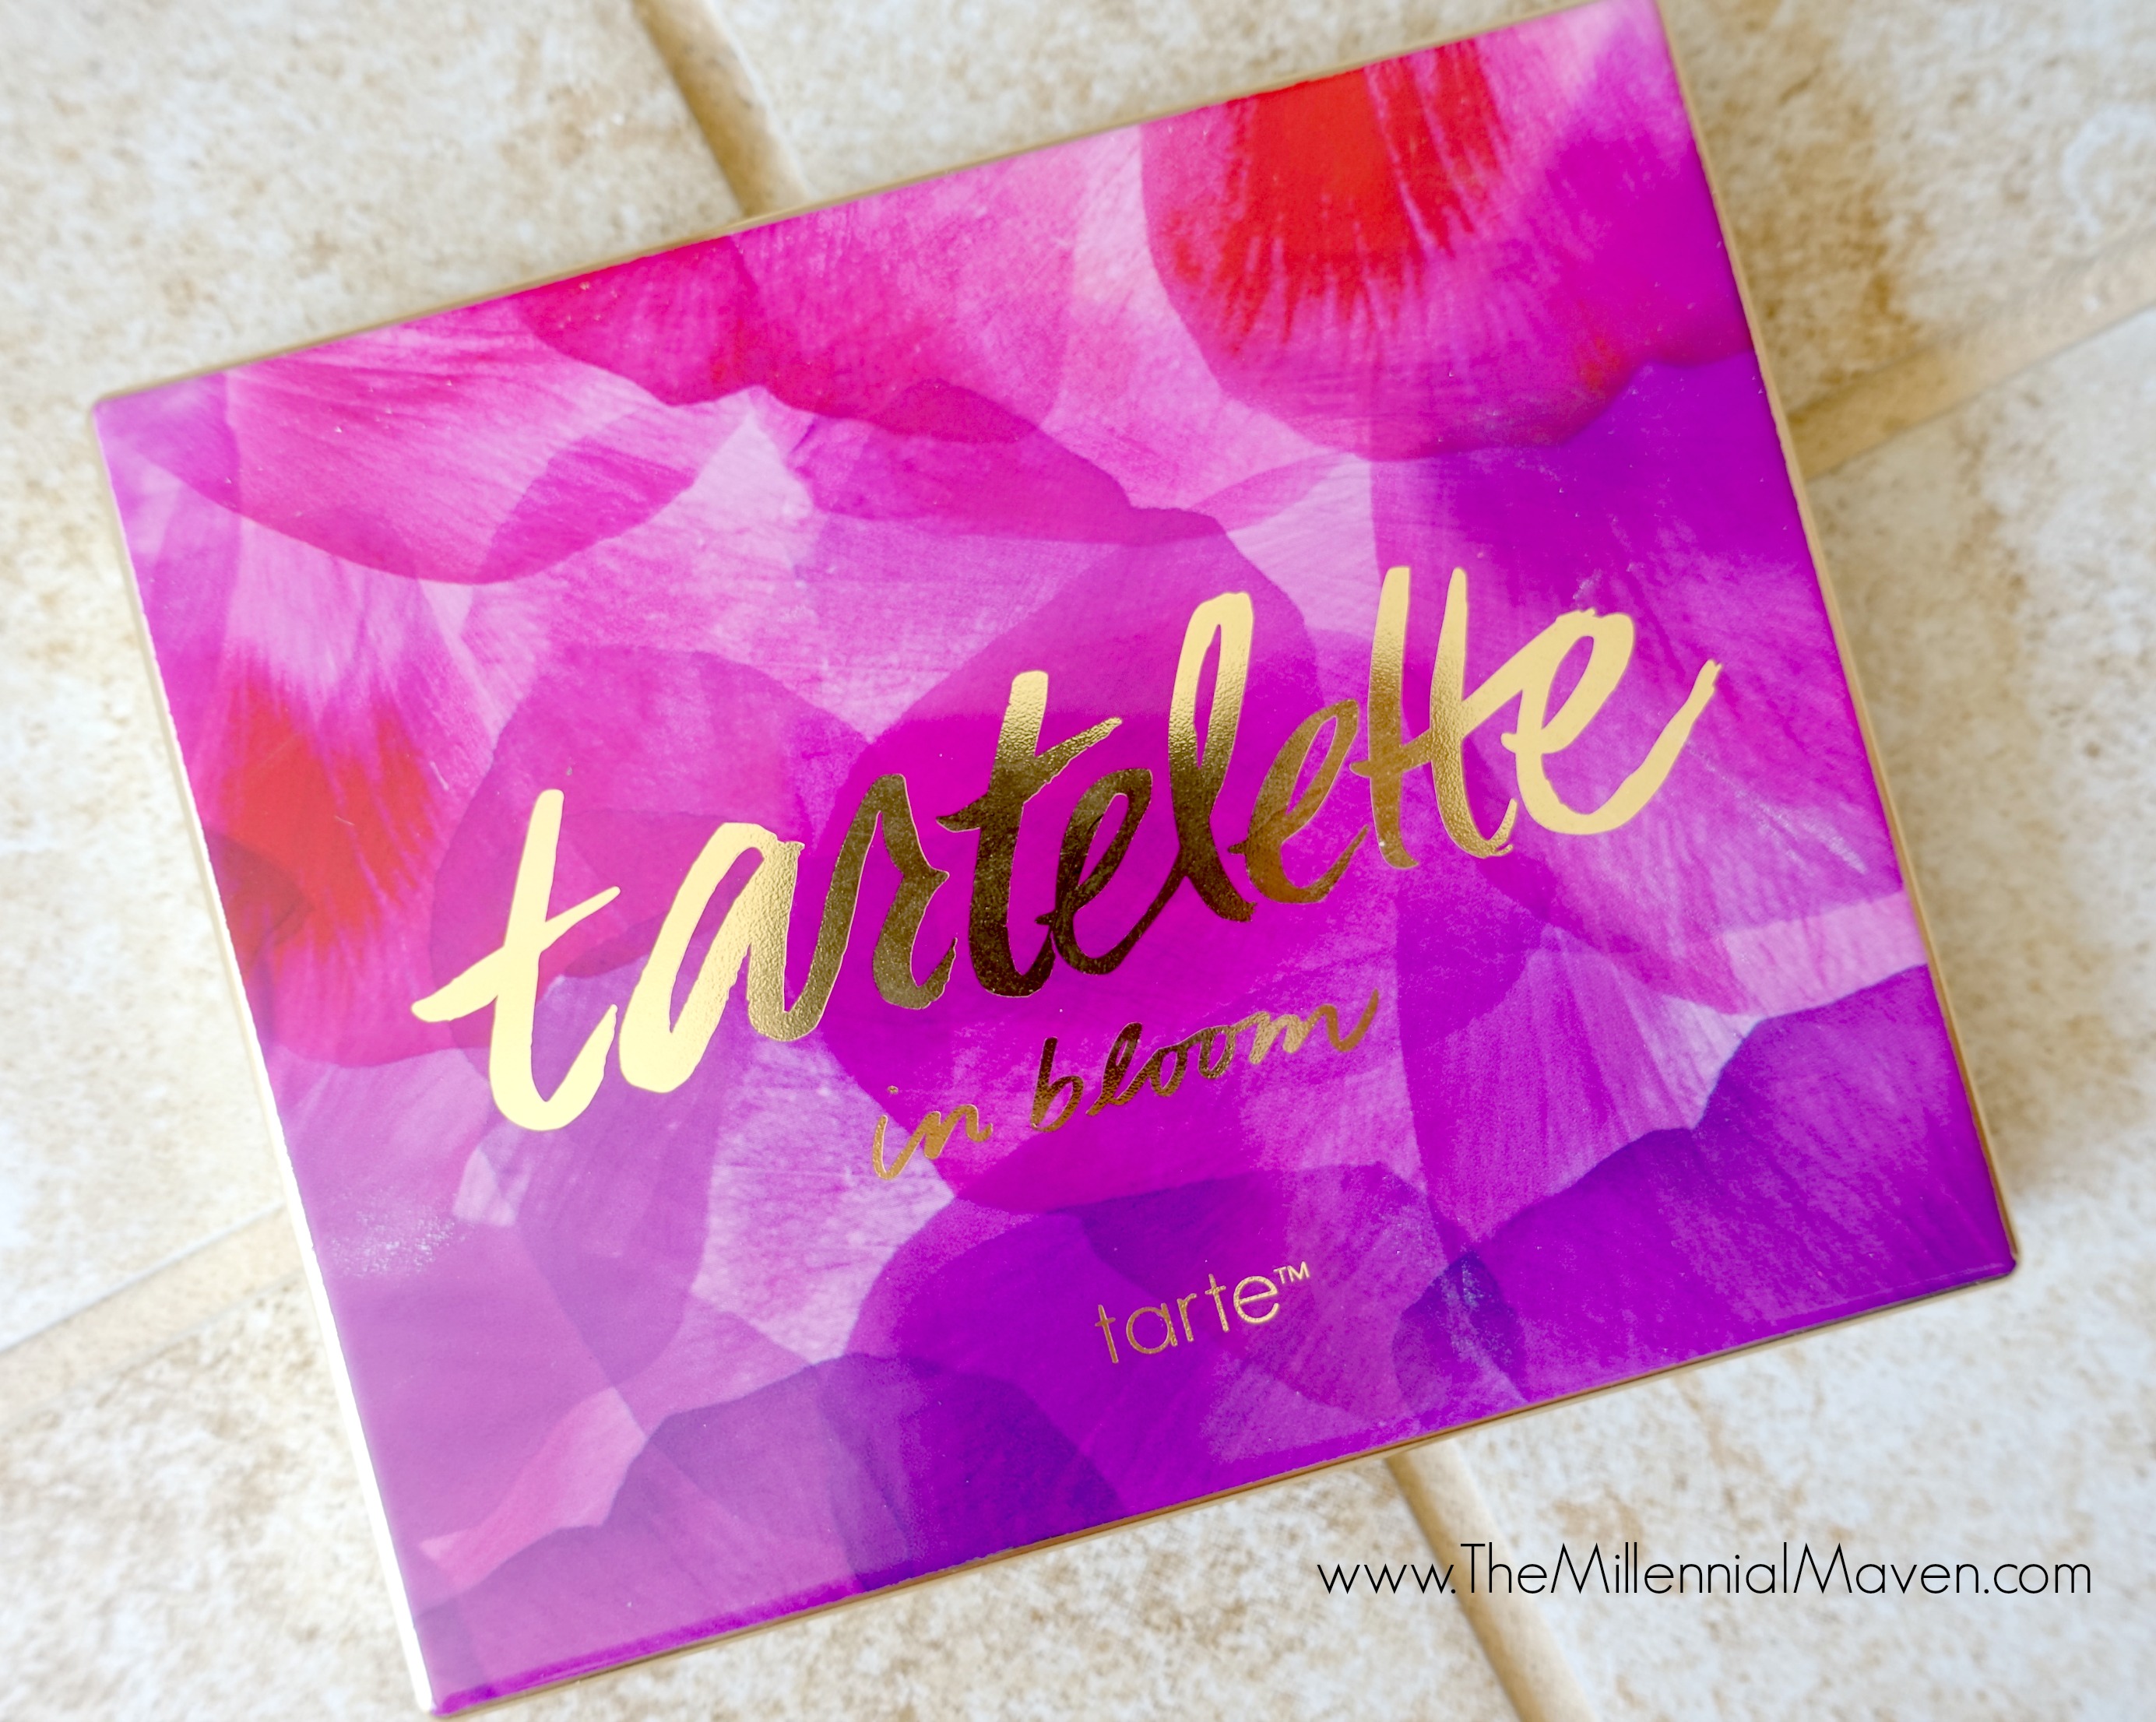 Tarte Tartelette In Bloom Eyeshadow Palette Review + Swatches